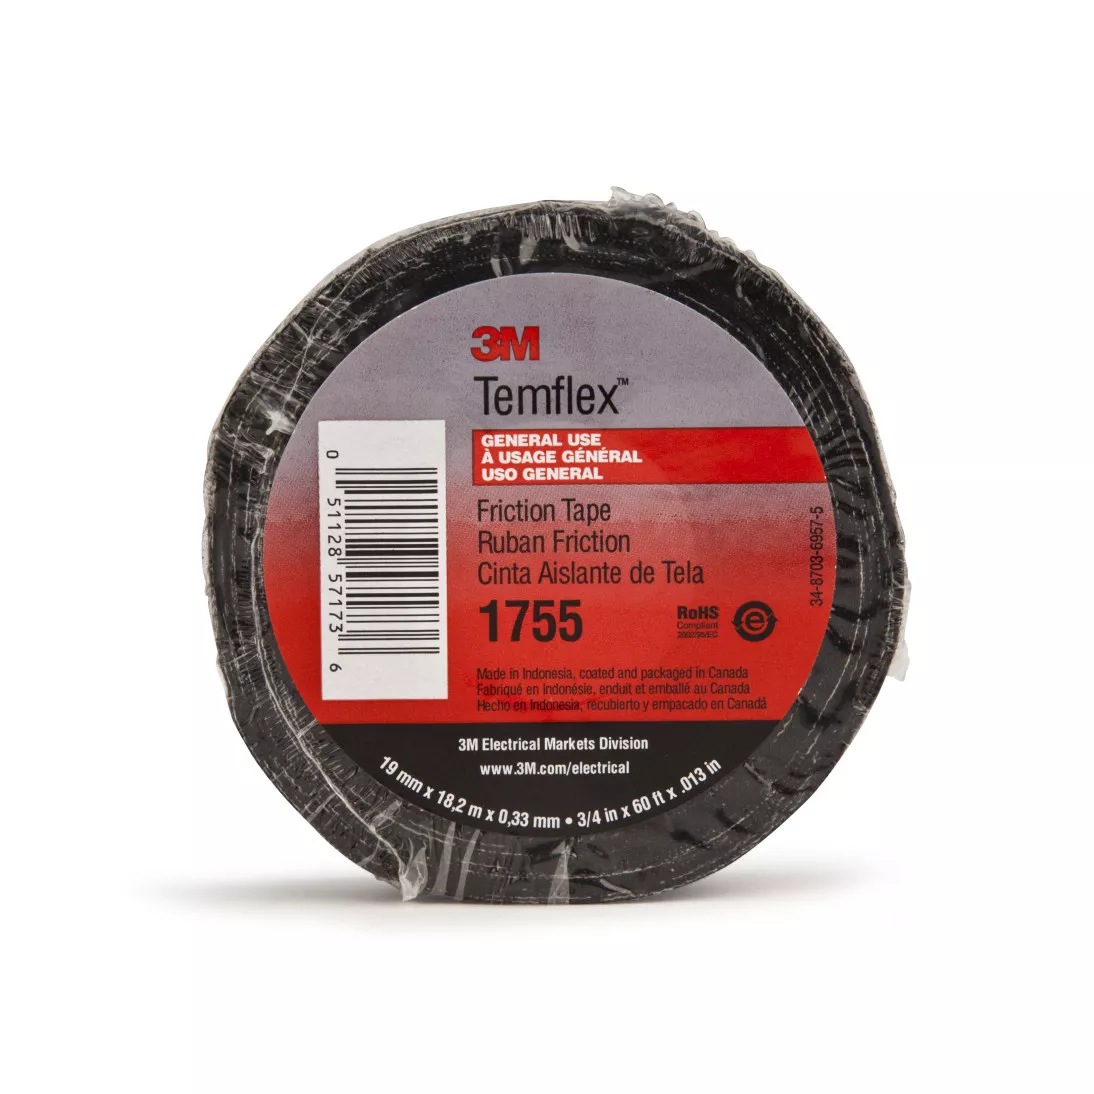 3M™ Temflex™ Cotton Friction Tape 1755, 3/4 in x 82-1/2 ft, Black, 60
rolls/Case